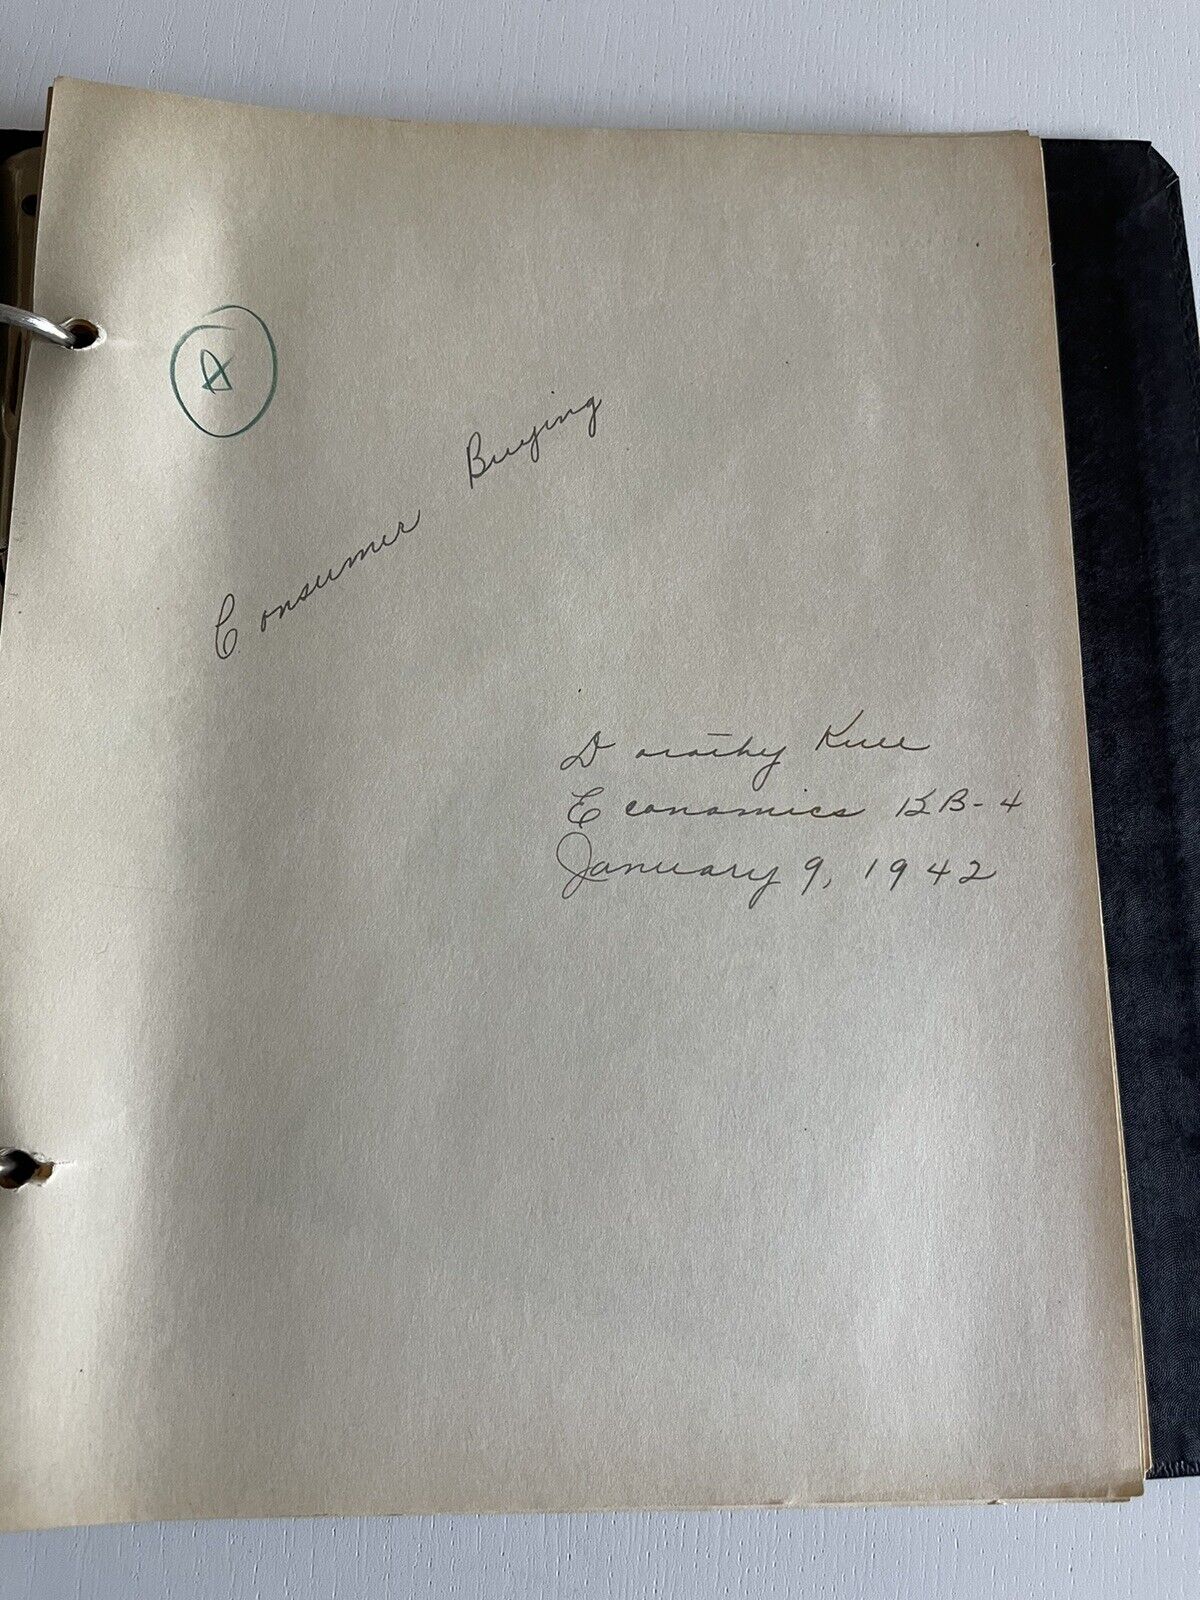 1941-1942 Economics notes in binder handwritten and newspaper articles